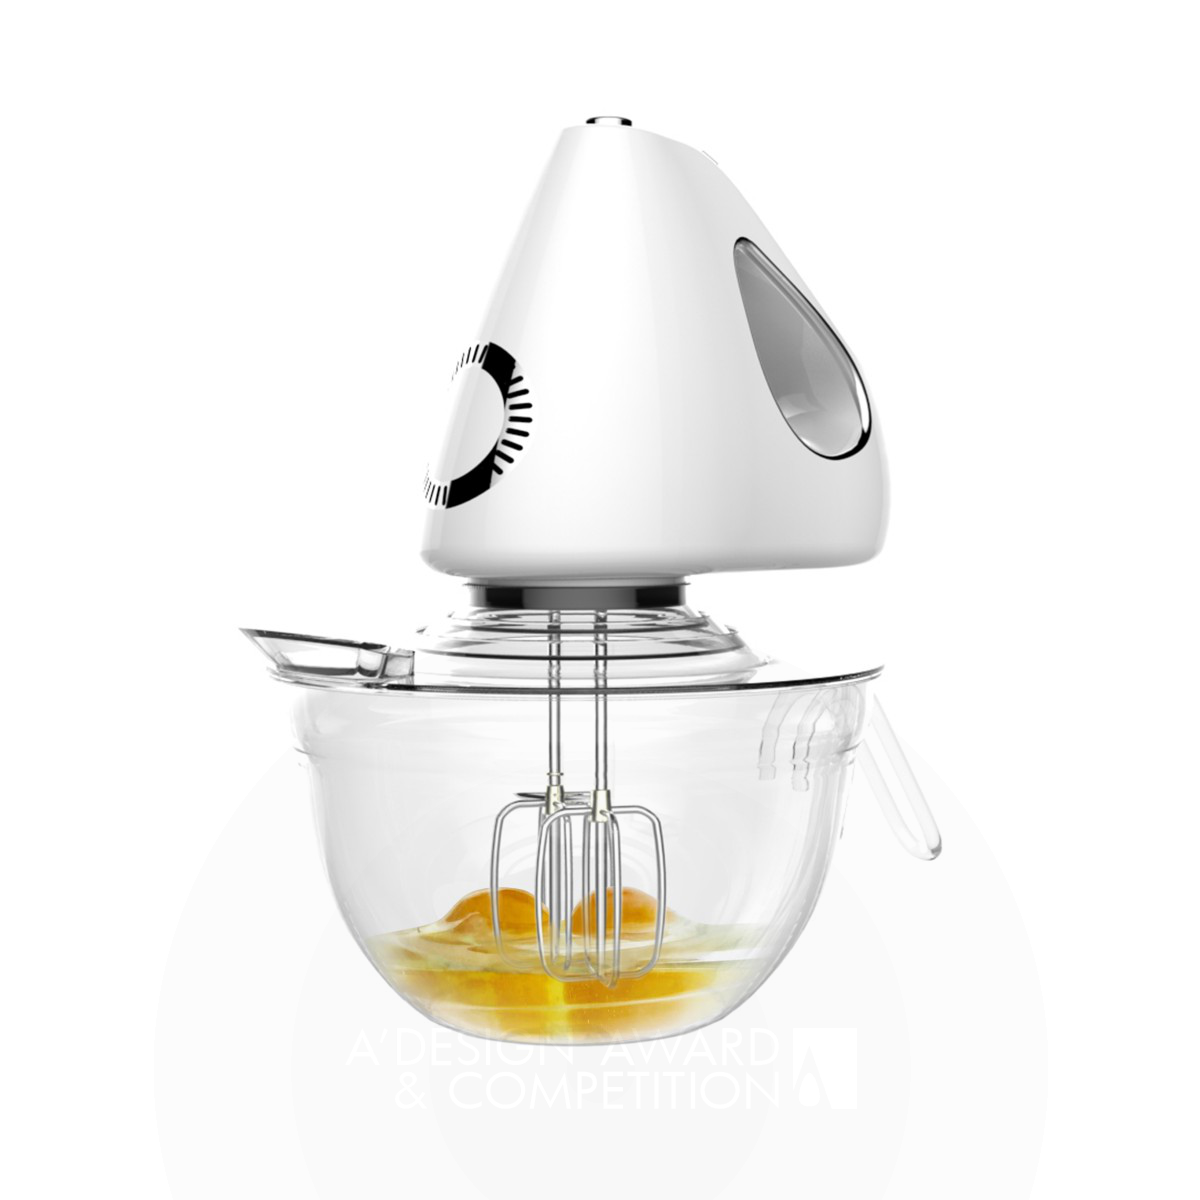 Miya Electric Egg Mixer by Wei Jingye